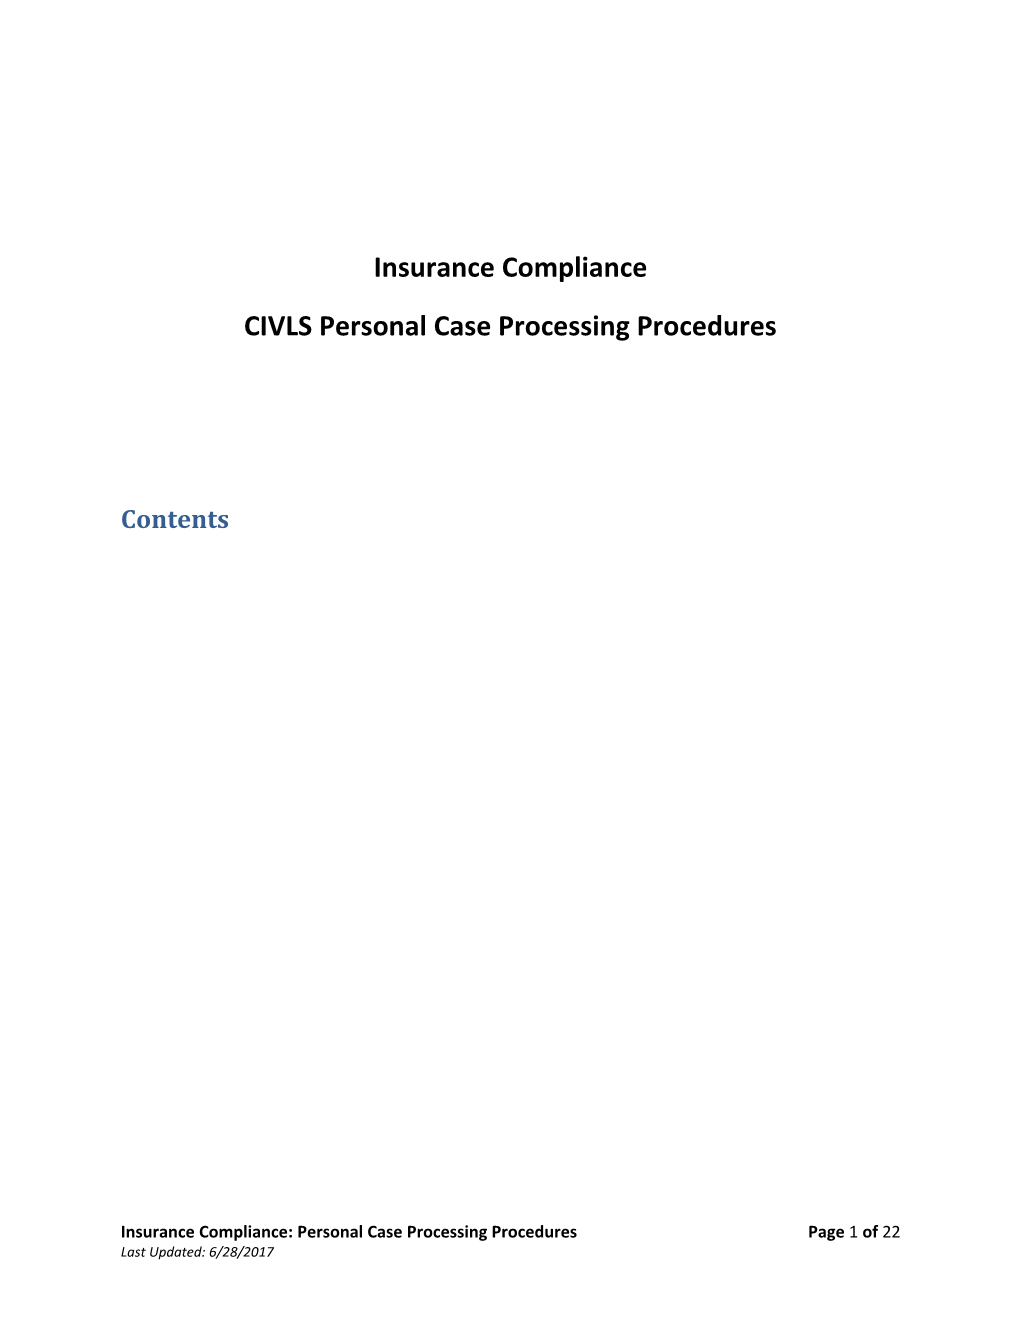 CIVLS Personal Case Processing Procedures